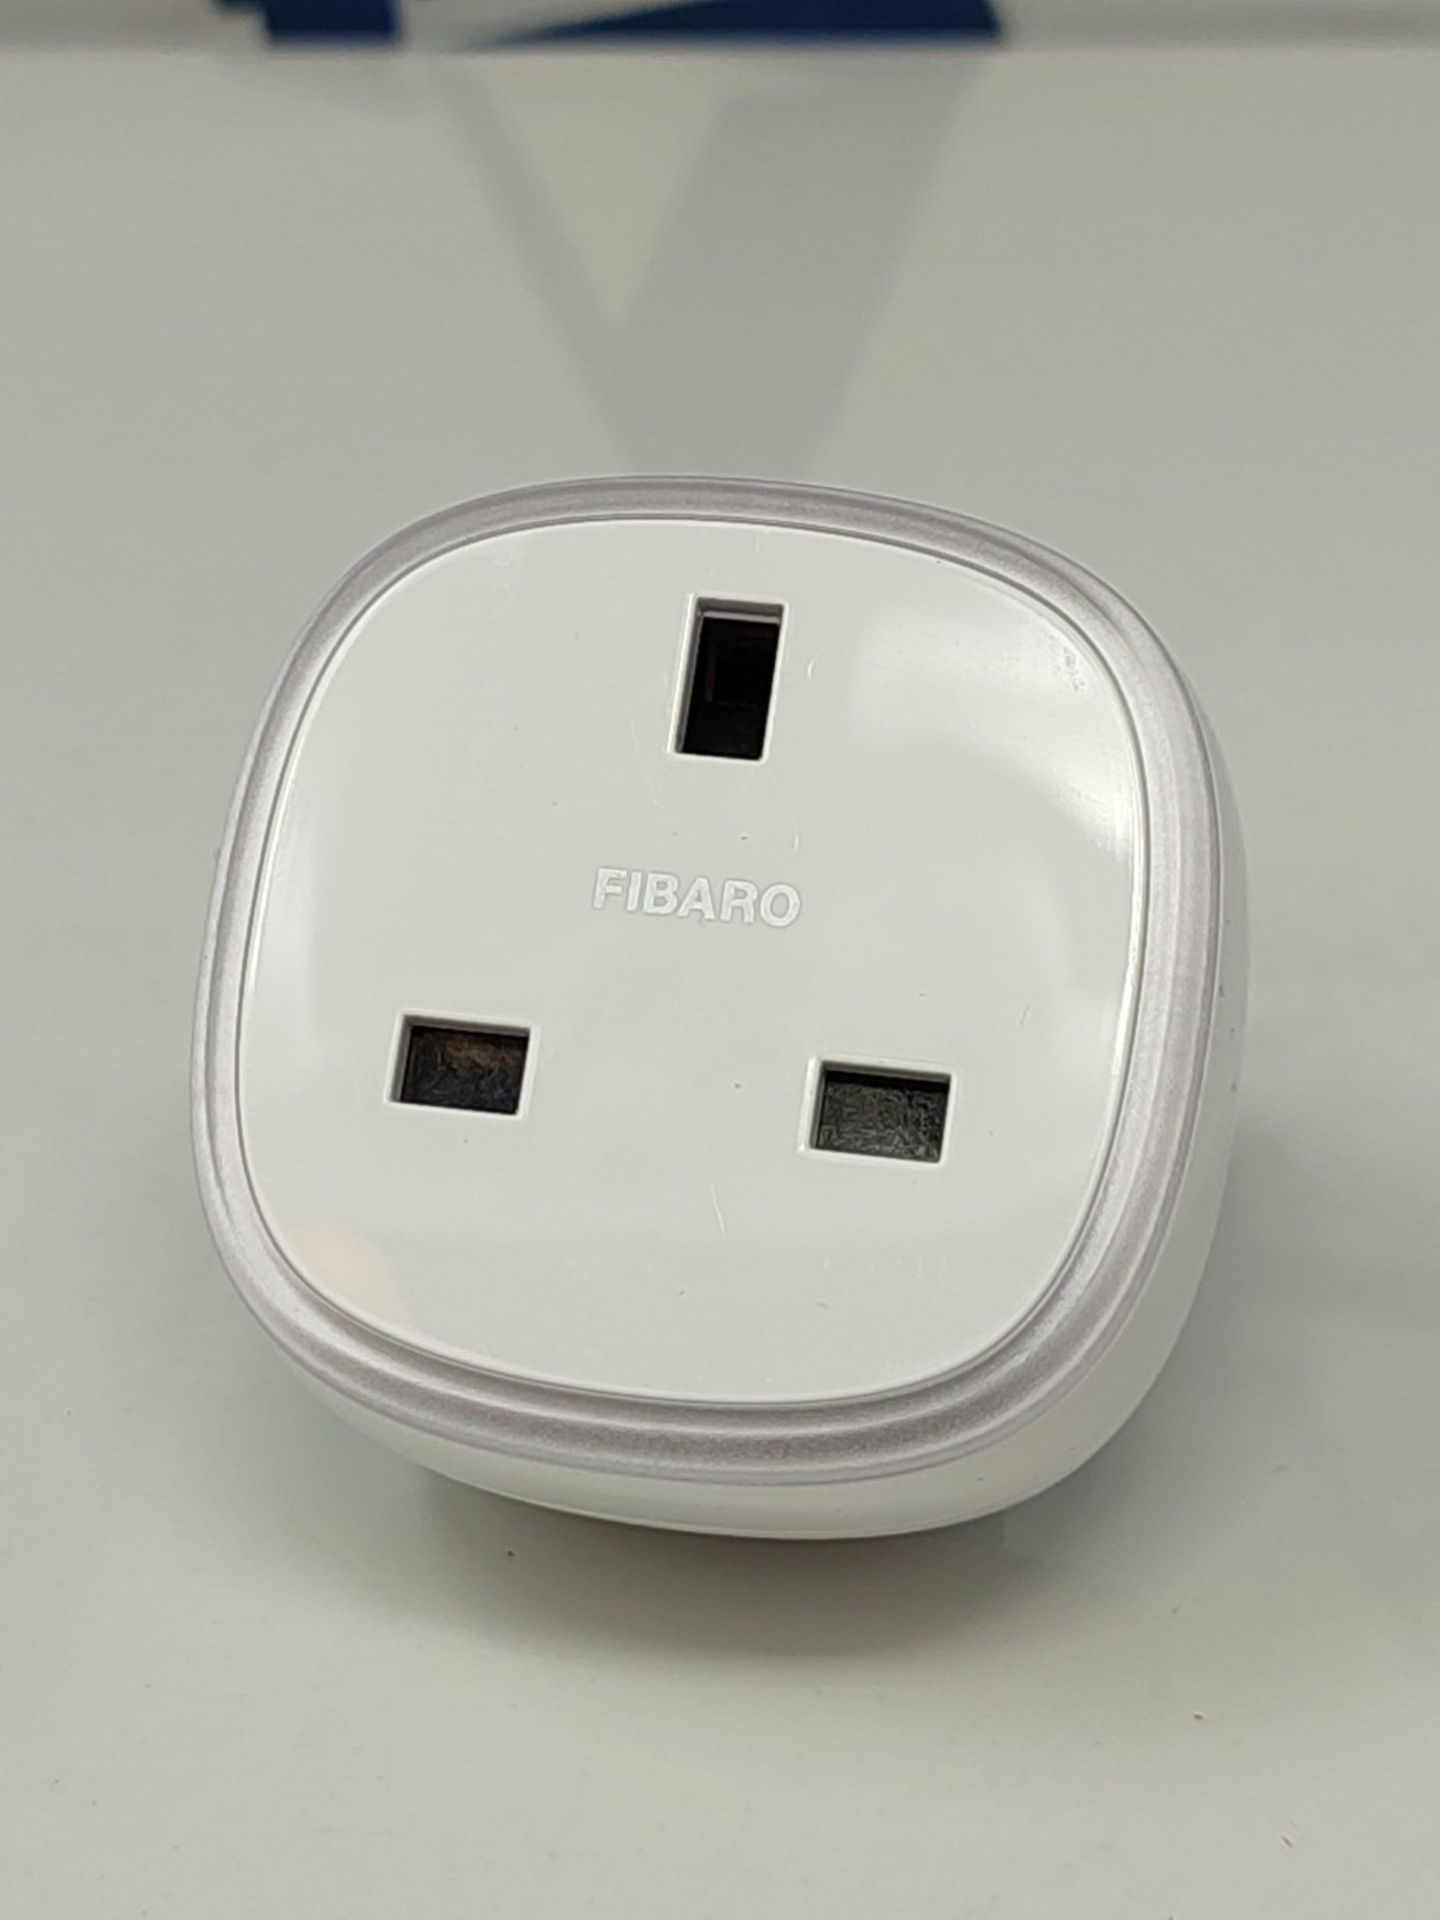 FIBARO Wall Plug/Z-Wave Plus Wireless Smart Socket, Type G, FGWPG-111, White - Image 3 of 3